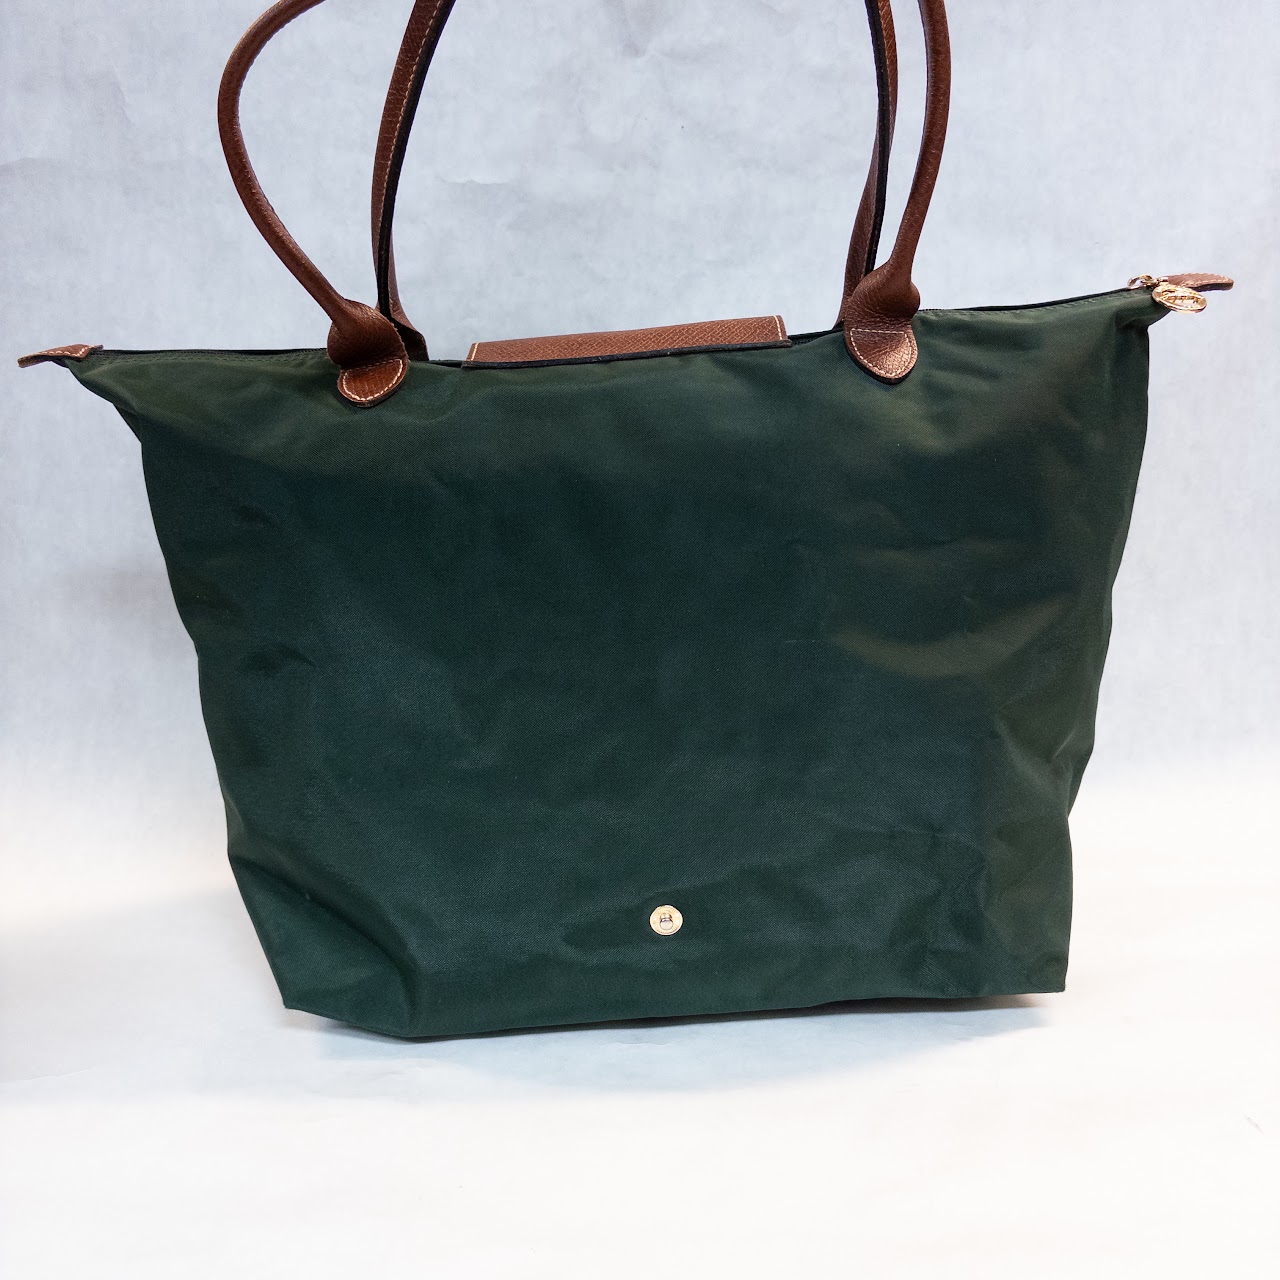 Longchamp Le Pliage Tote Bag